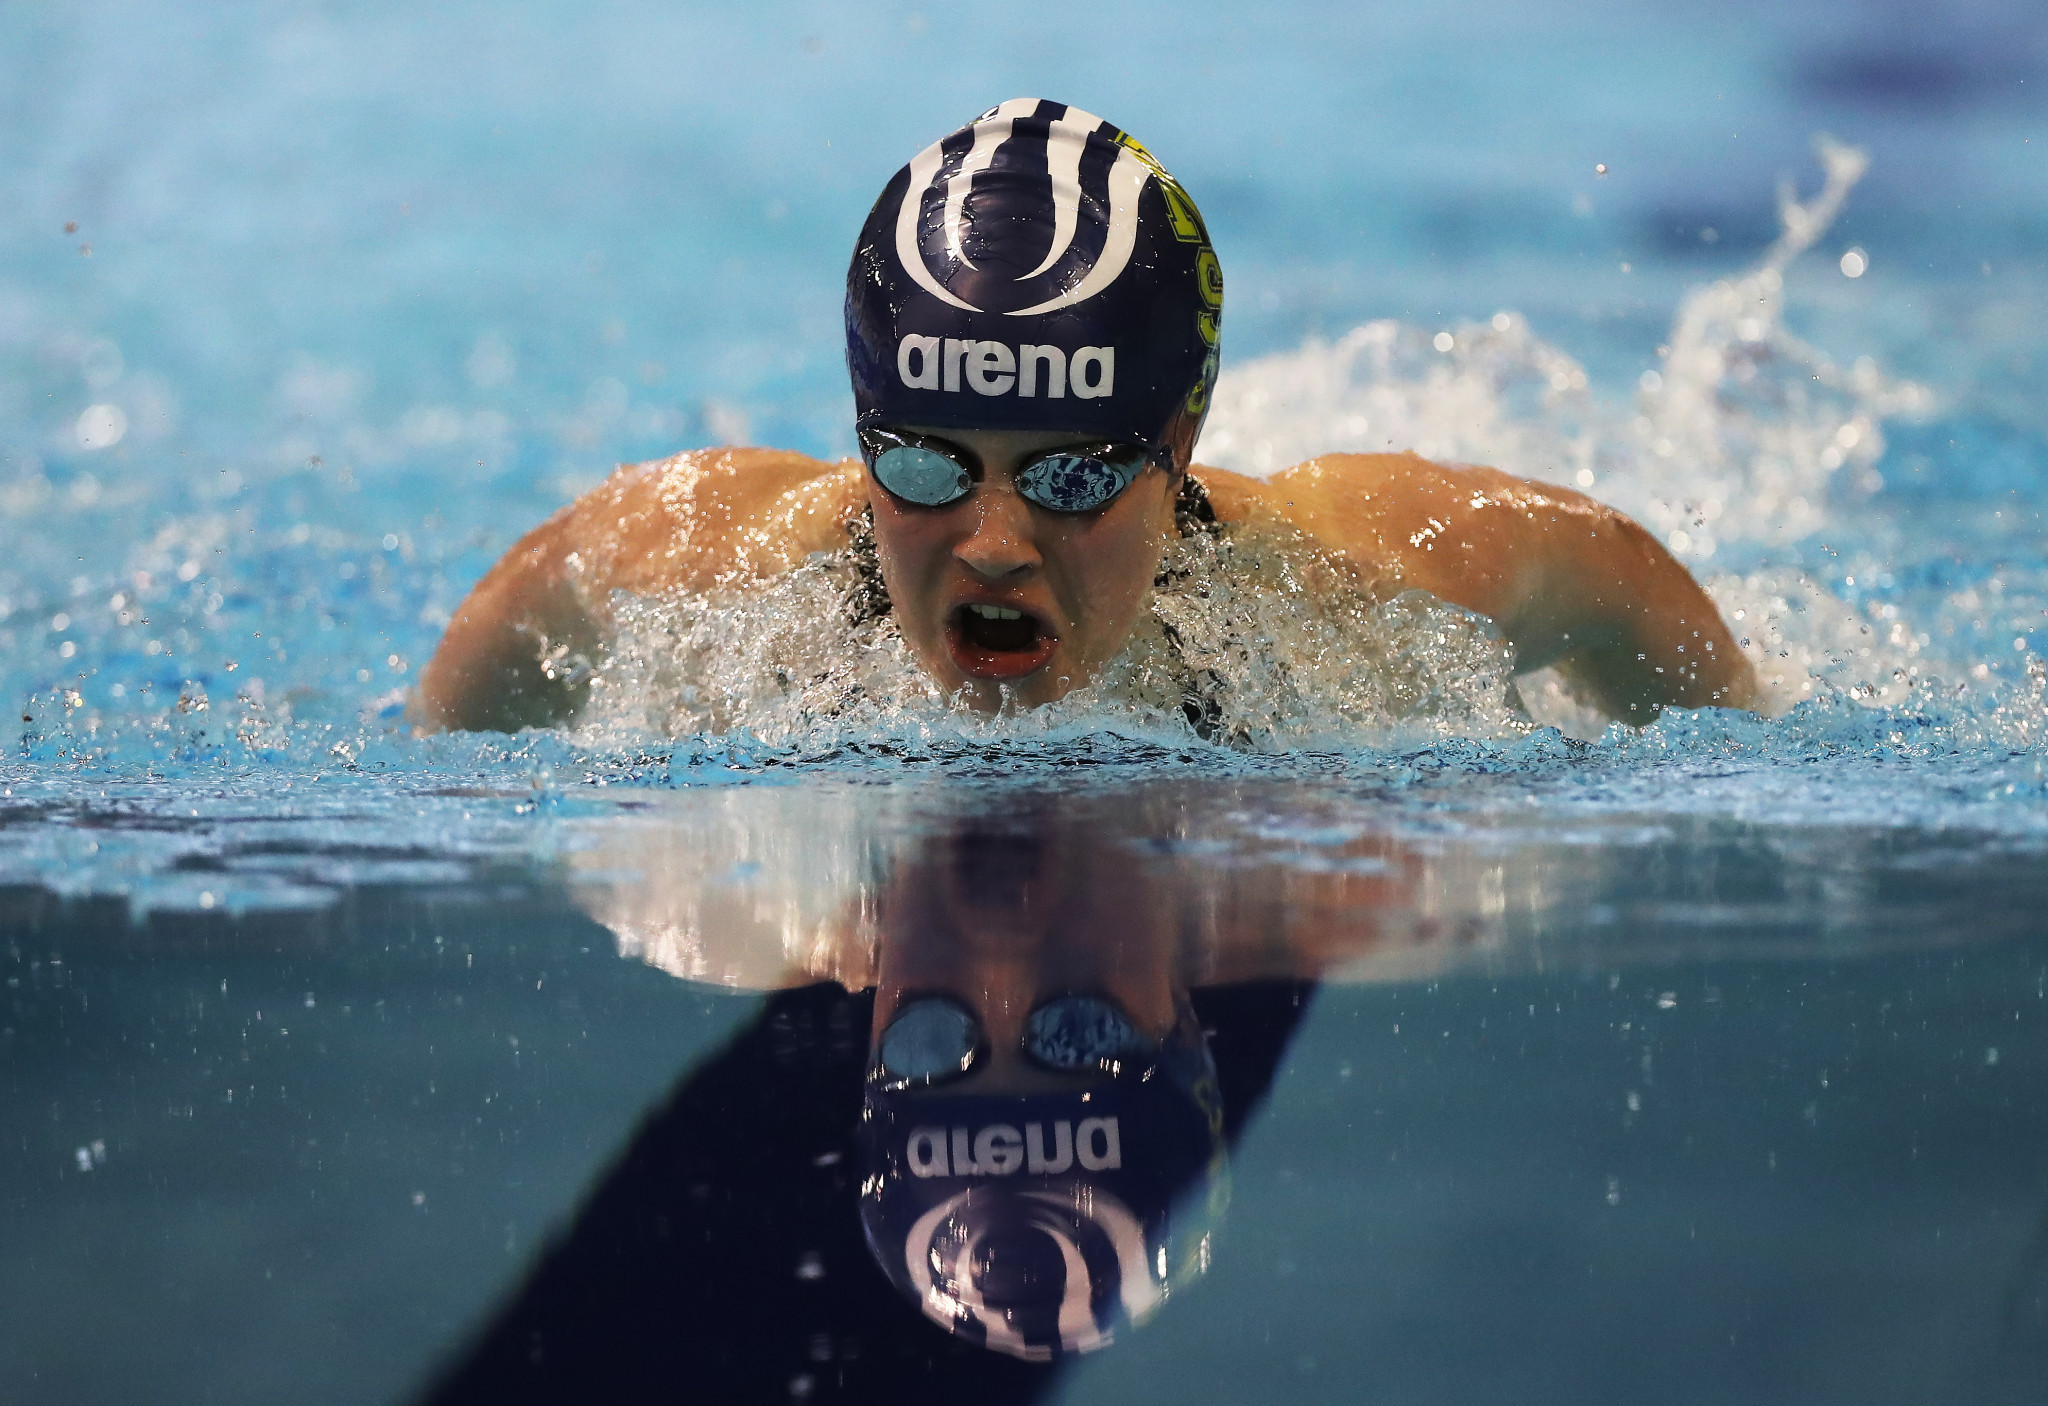 Robinson impresses on opening day of World Para Swimming World Series in Copenhagen